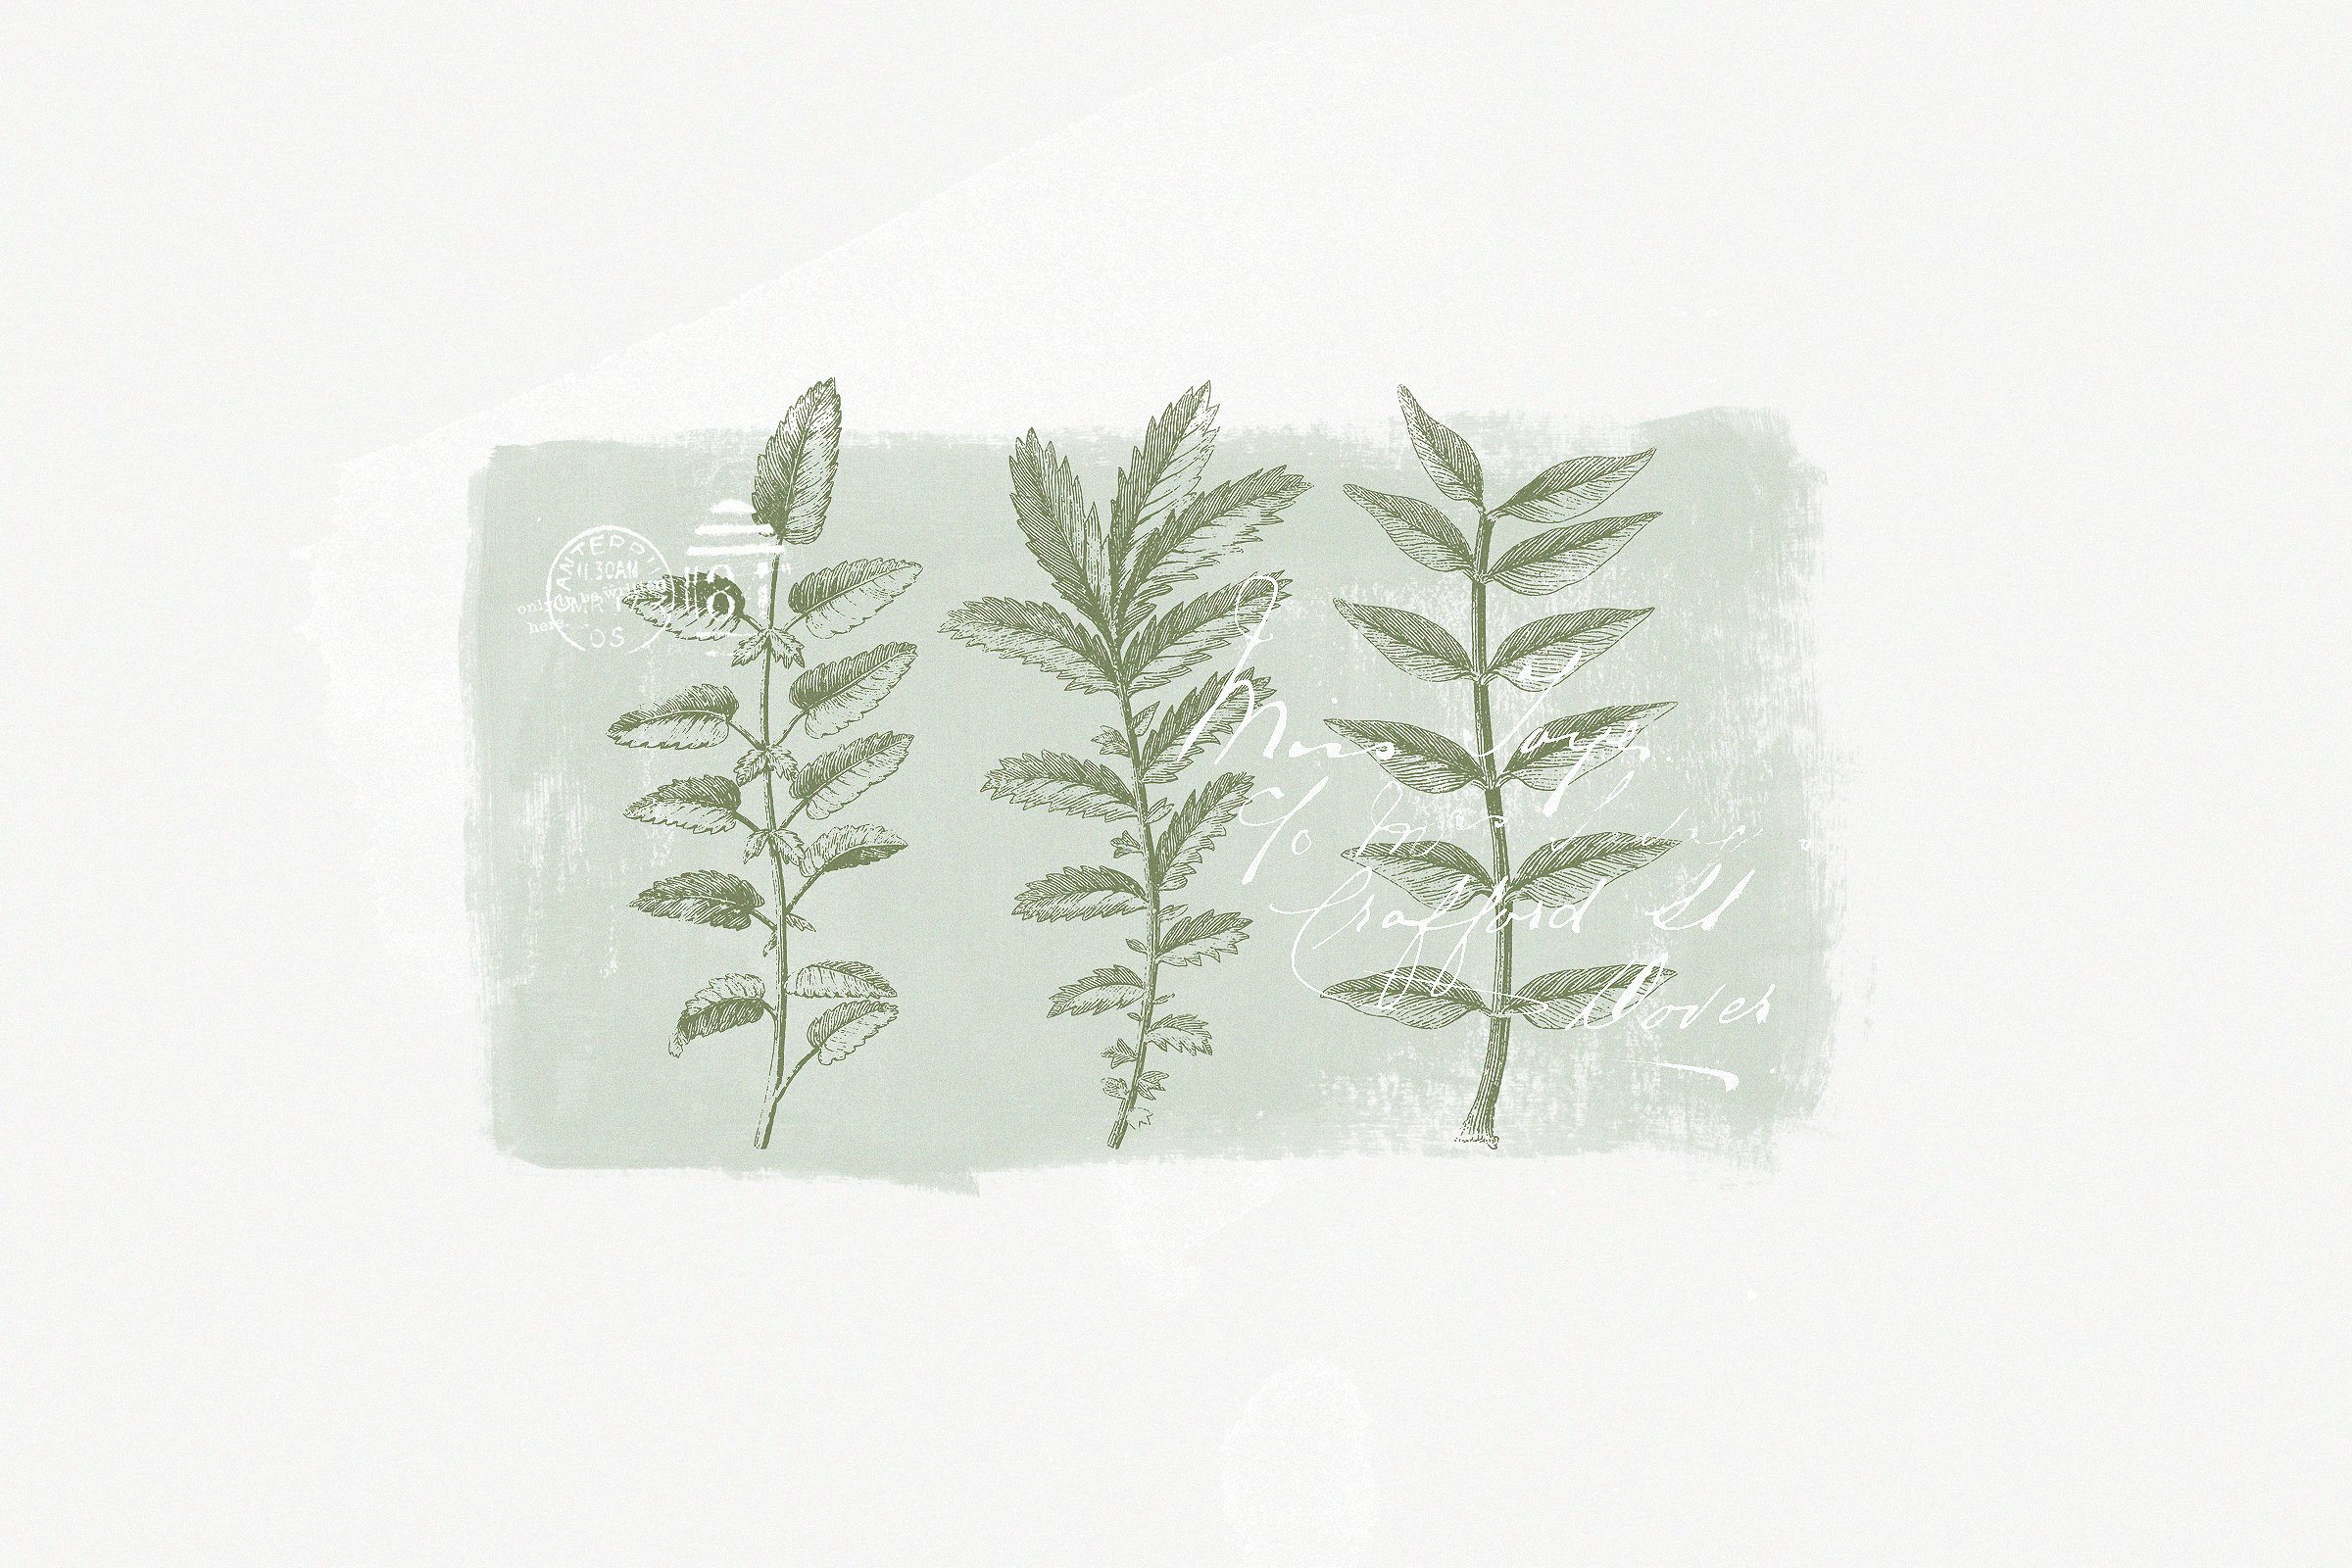 147种古董书籍植物插画素材合集 147 Botanical Illustrations Pack插图(1)